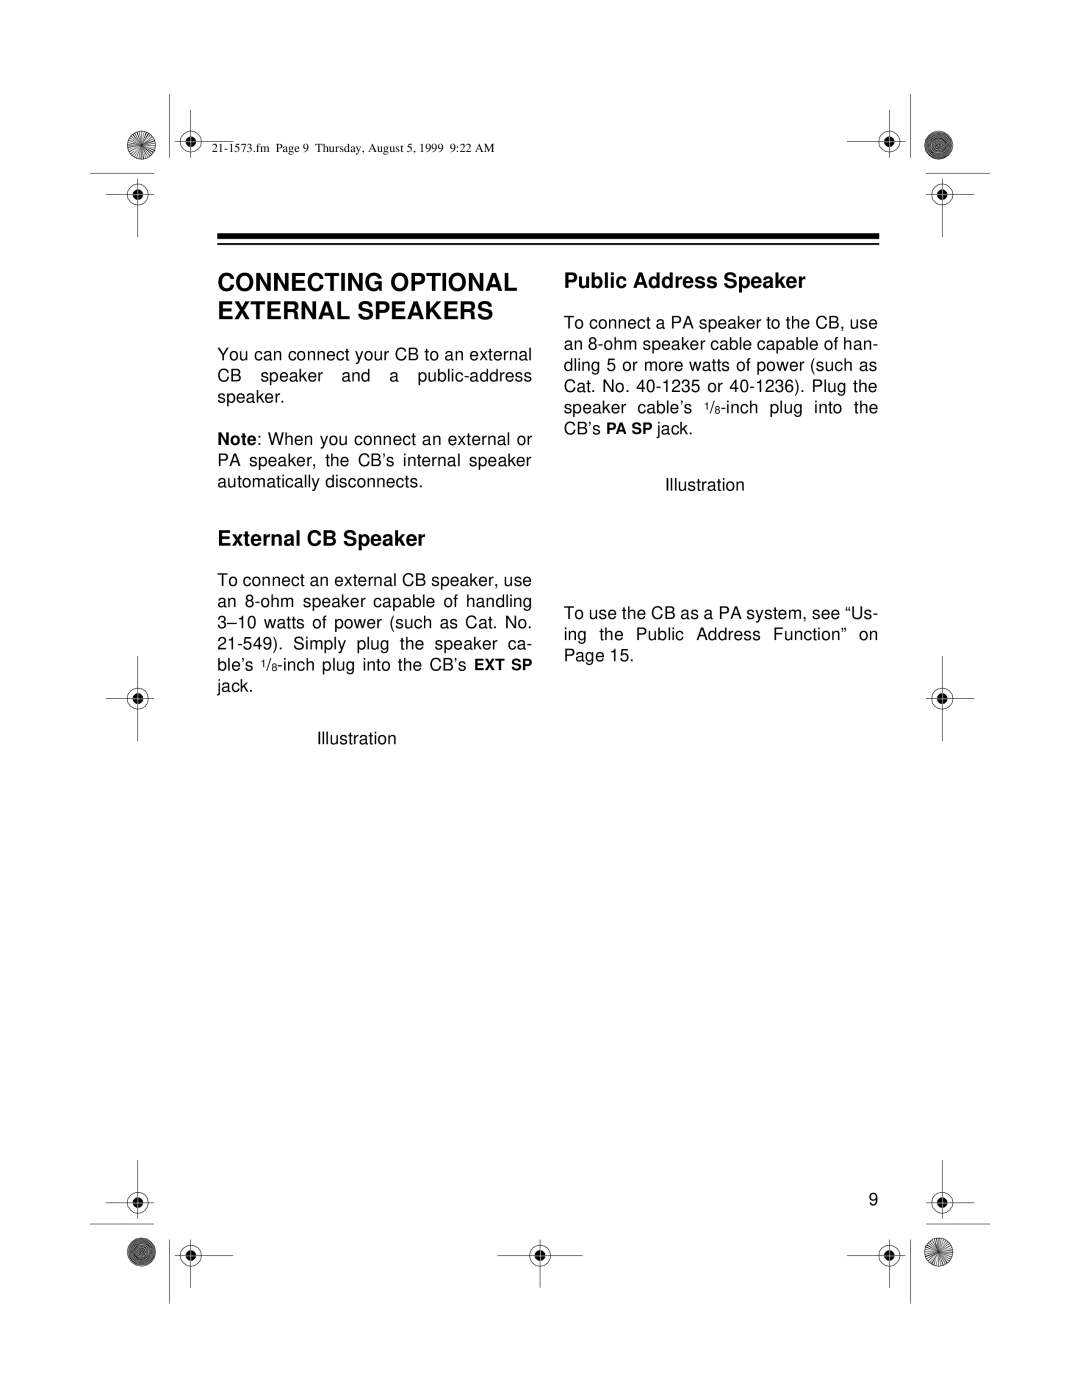 Samsung TRC-445 owner manual Connecting Optional External Speakers, Public Address Speaker, External CB Speaker 